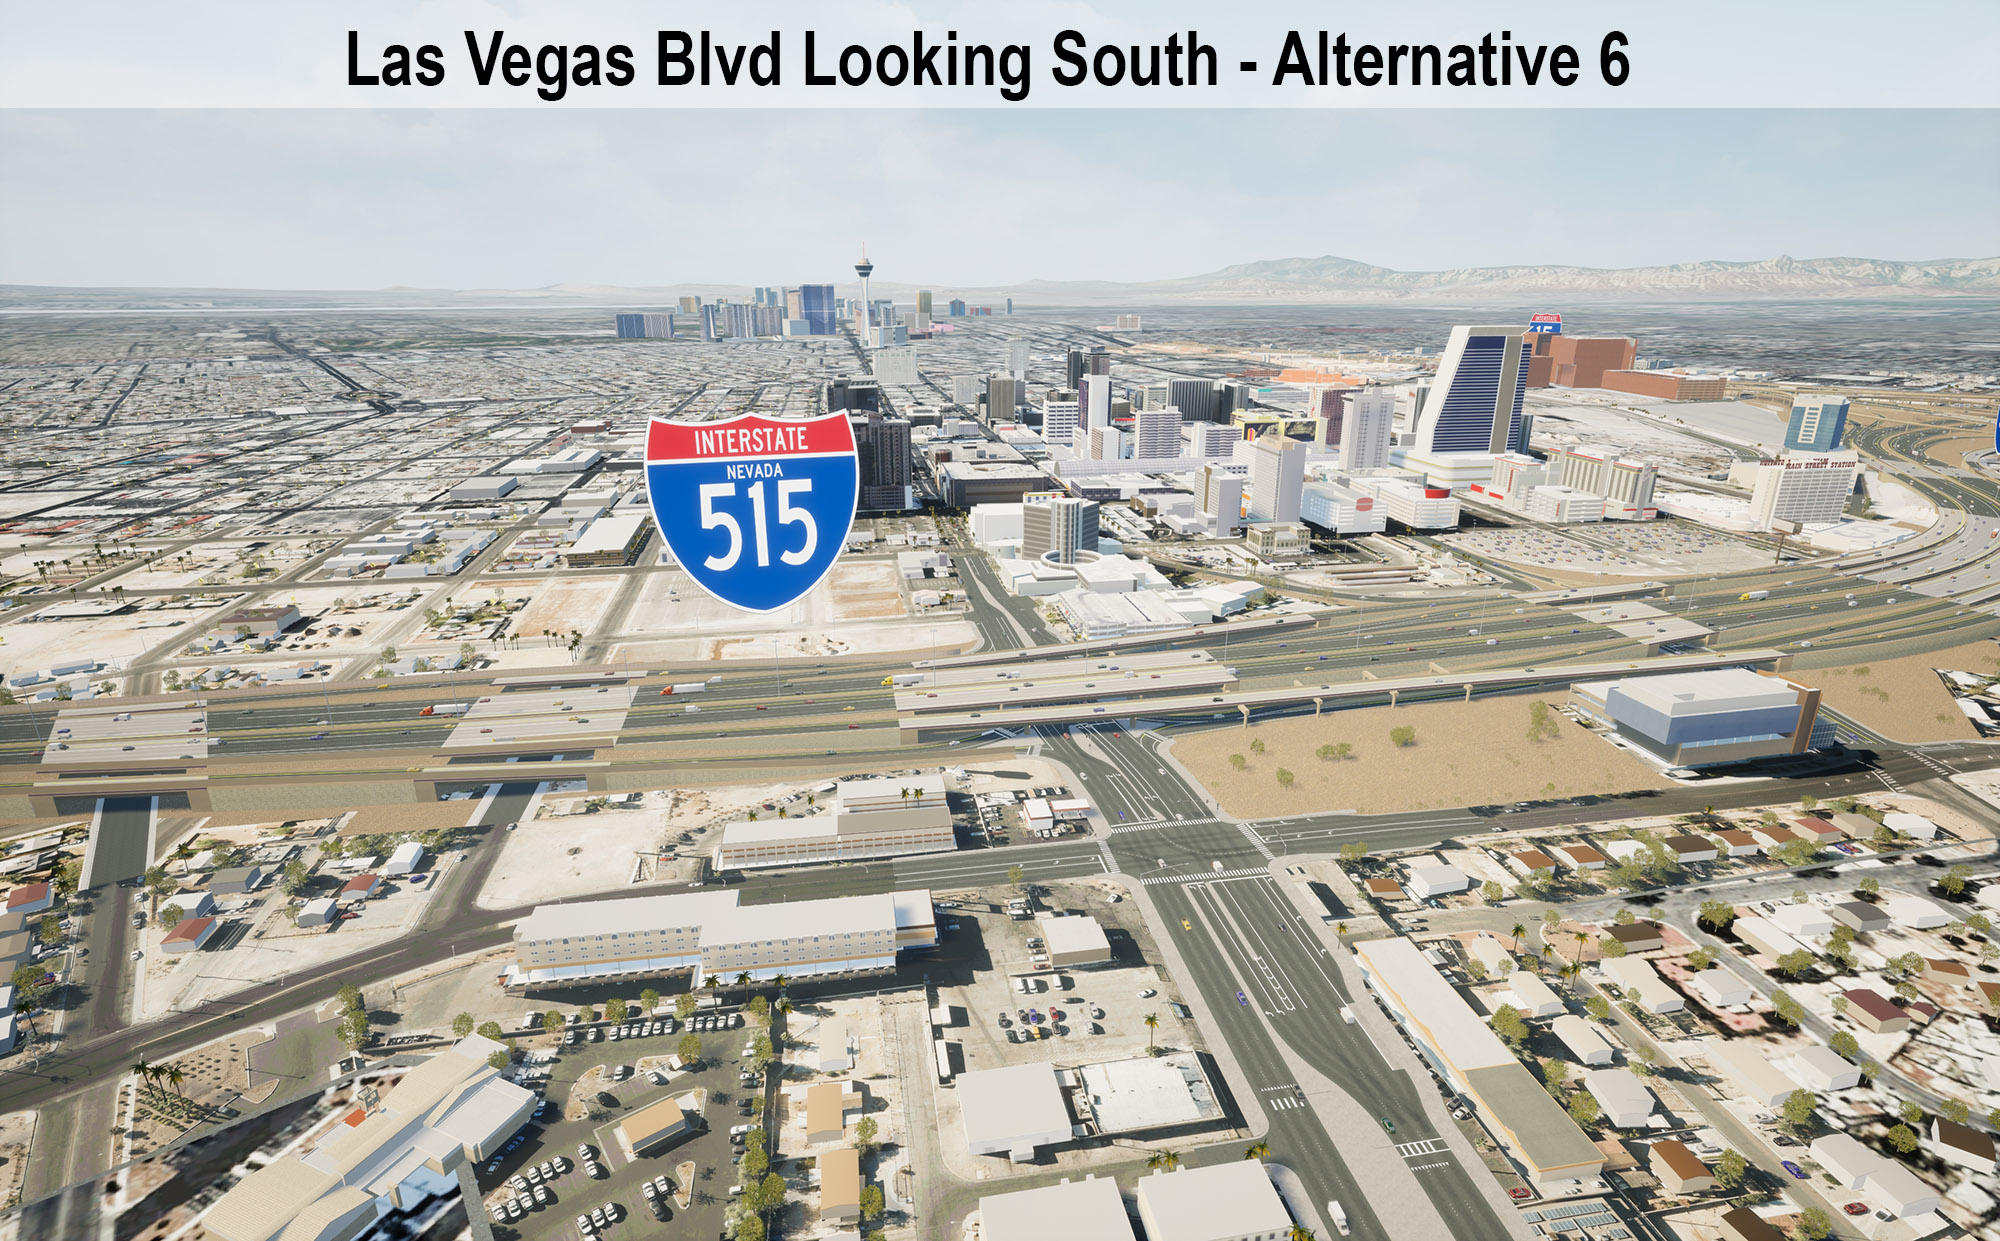 Las Vegas Blvd Looking South - Alternative 6